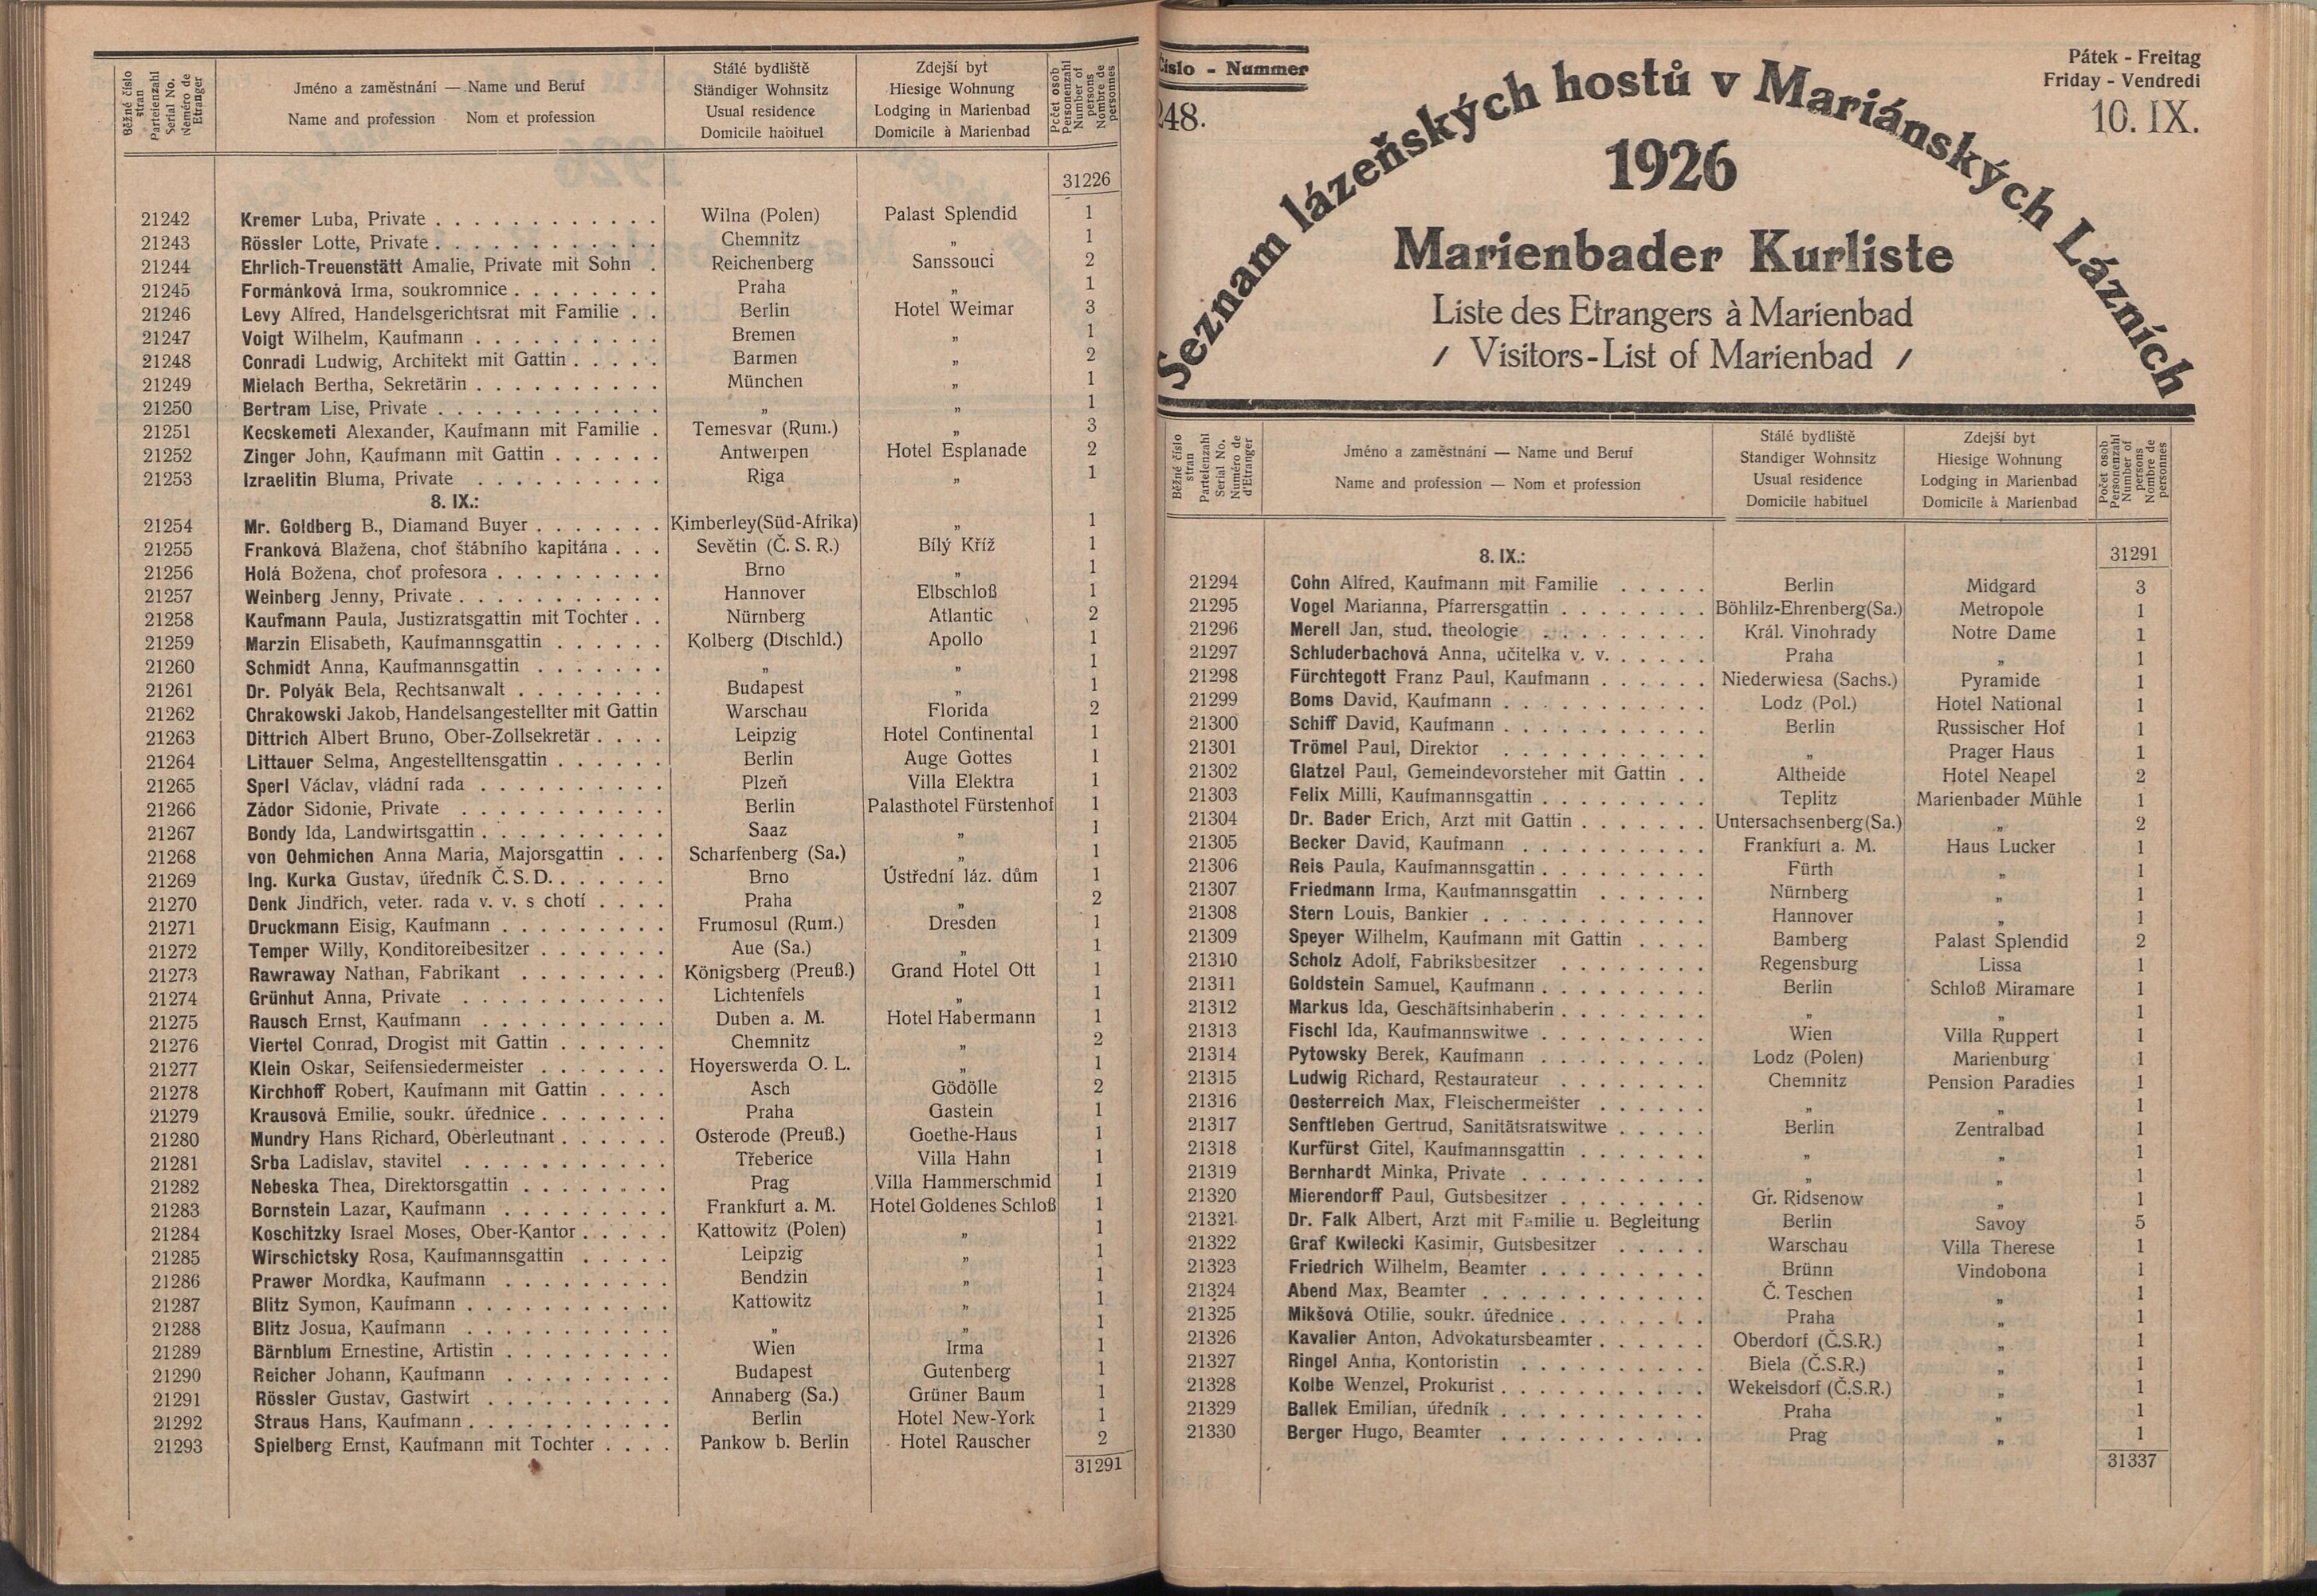 264. soap-ch_knihovna_marienbader-kurliste-1926_2640